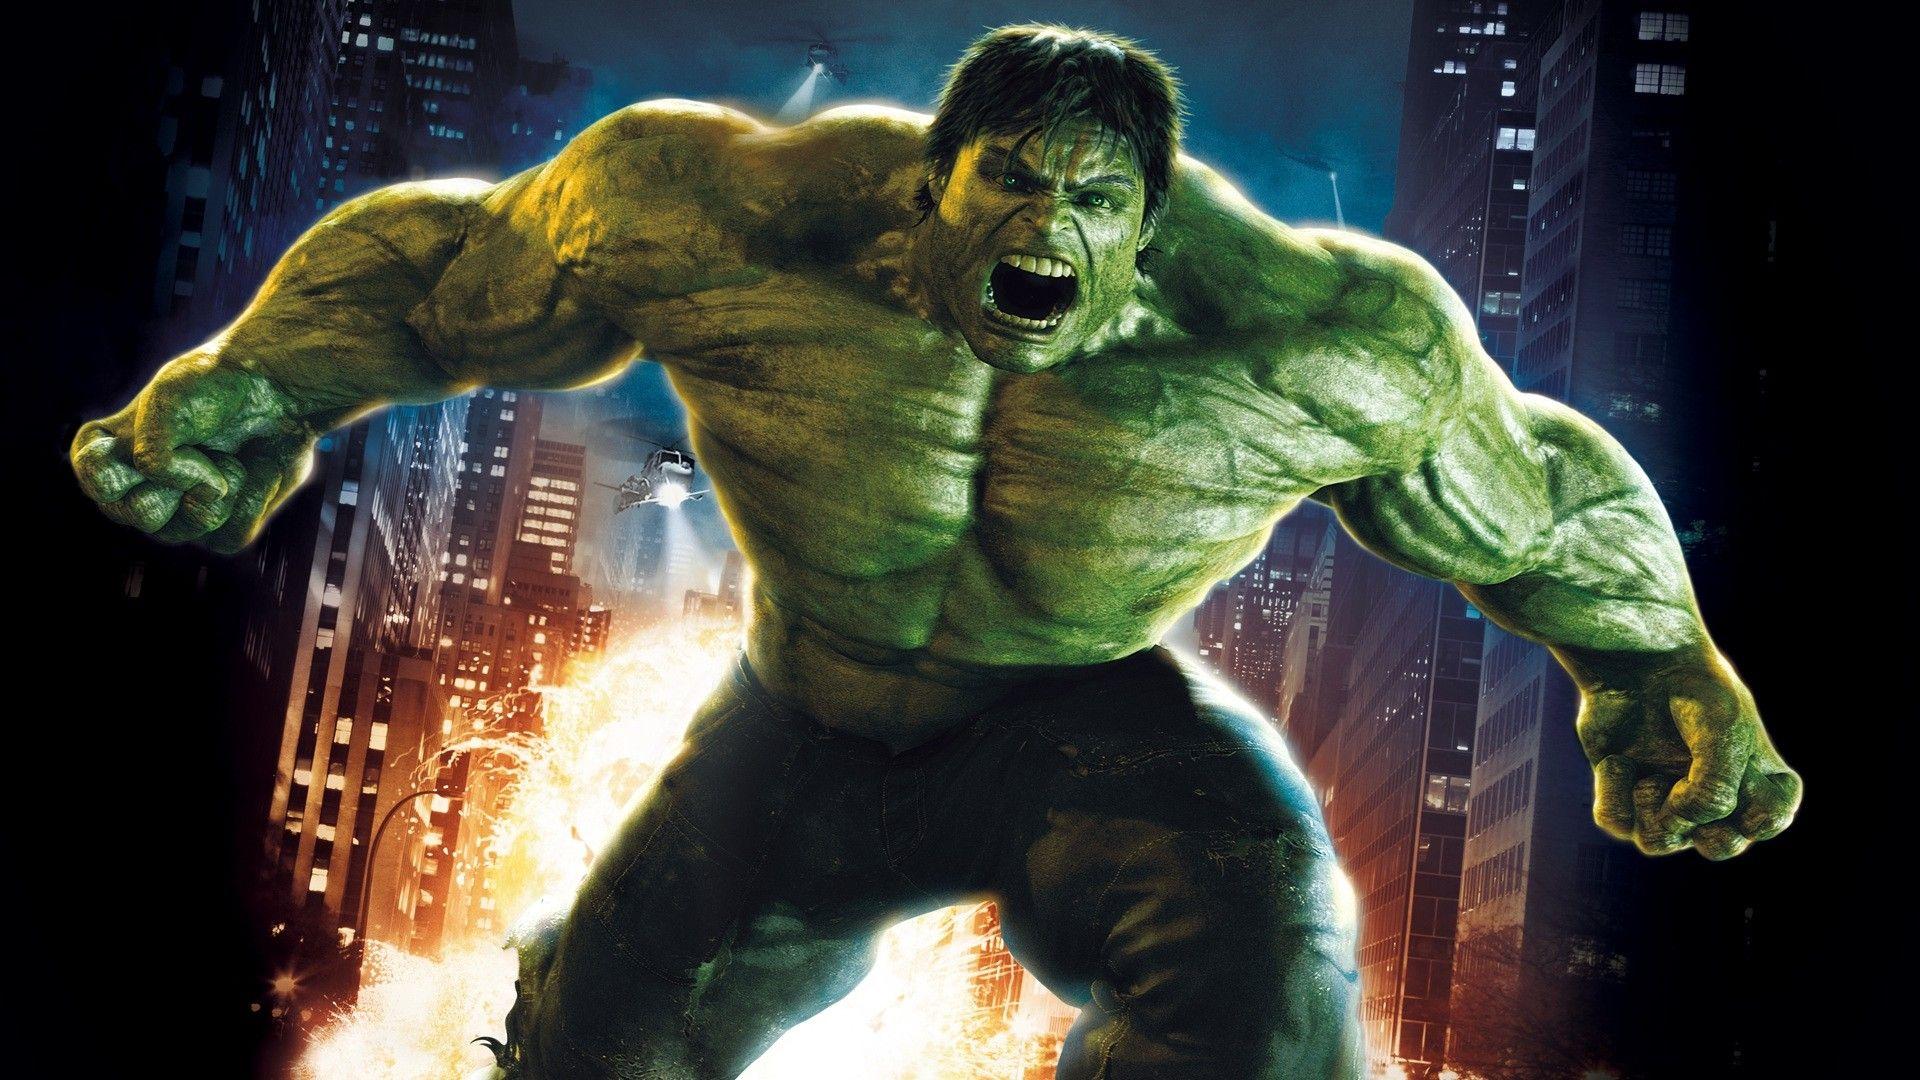 Realistic Hulk Wallpapers - Top Free ...